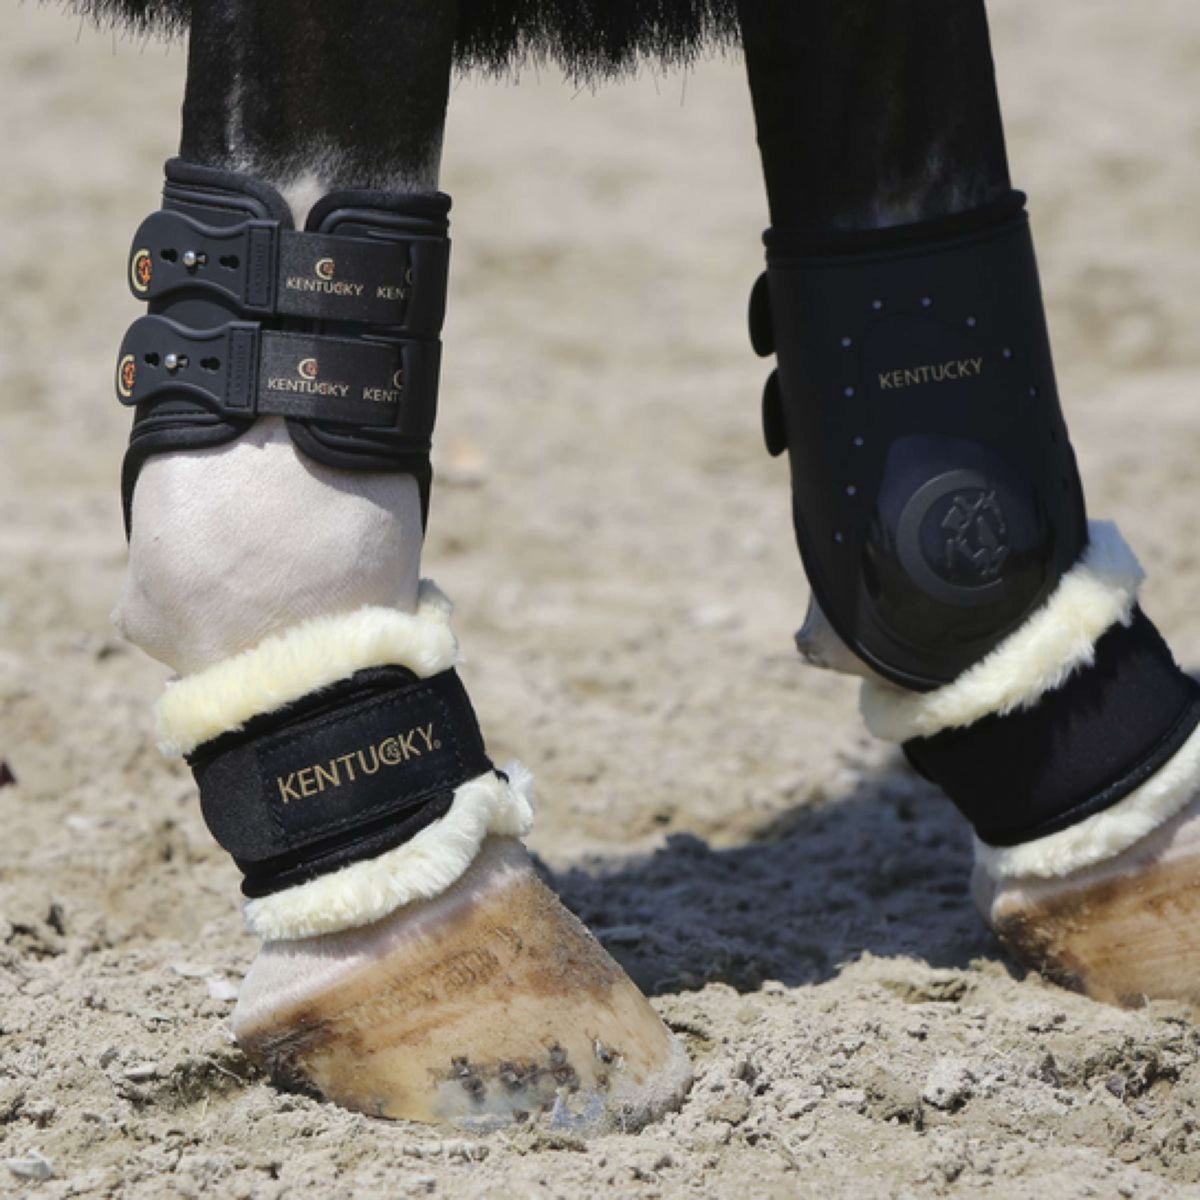 Kentucky Horsewear Fesselschutz Pastern Sheepskin